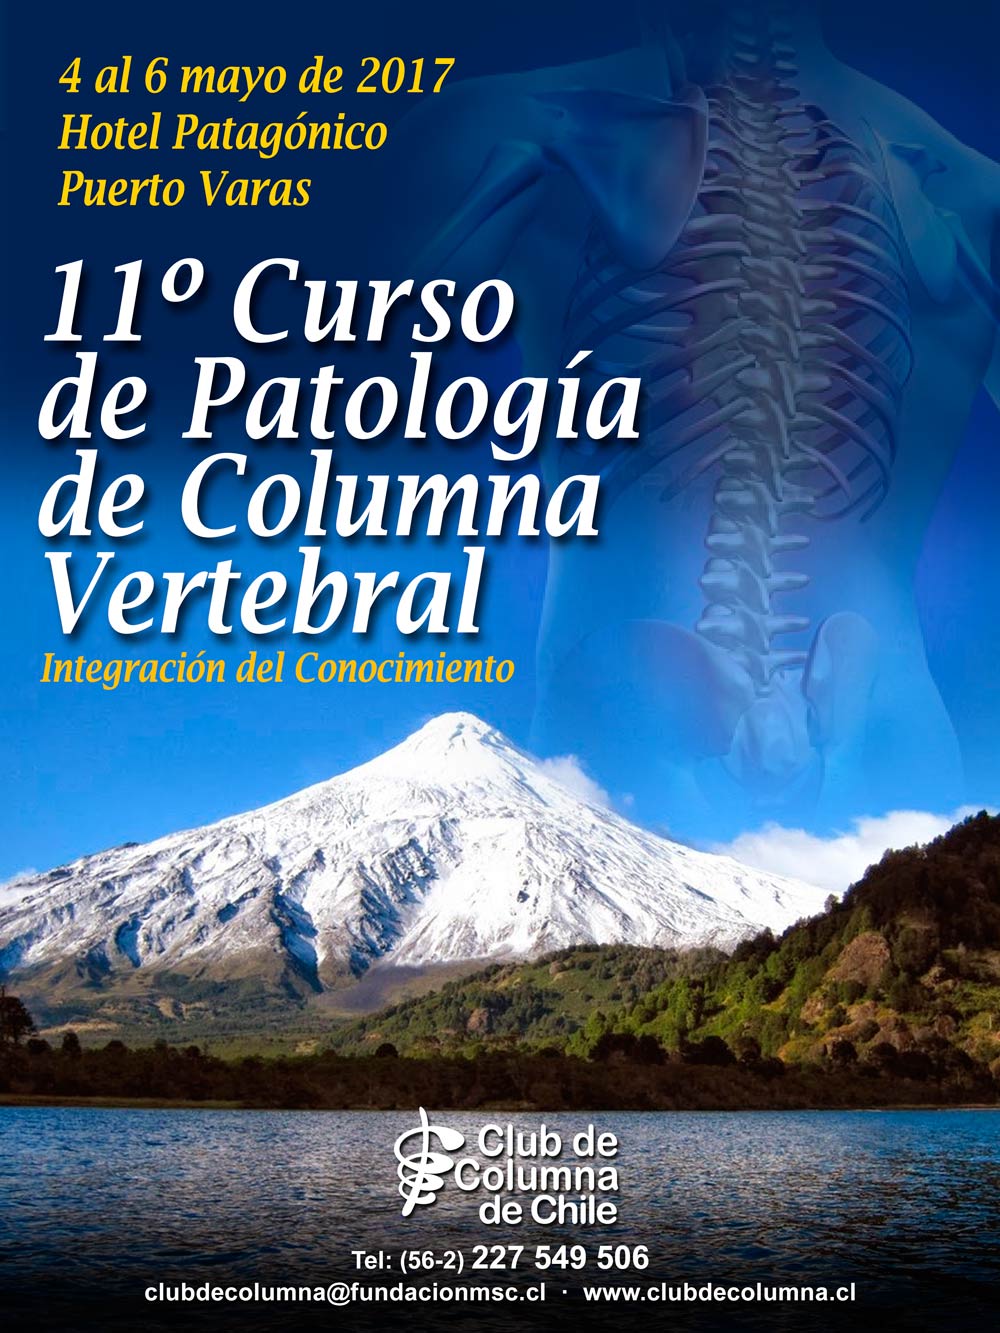 11° Curso de Patología de Columna Vertebral